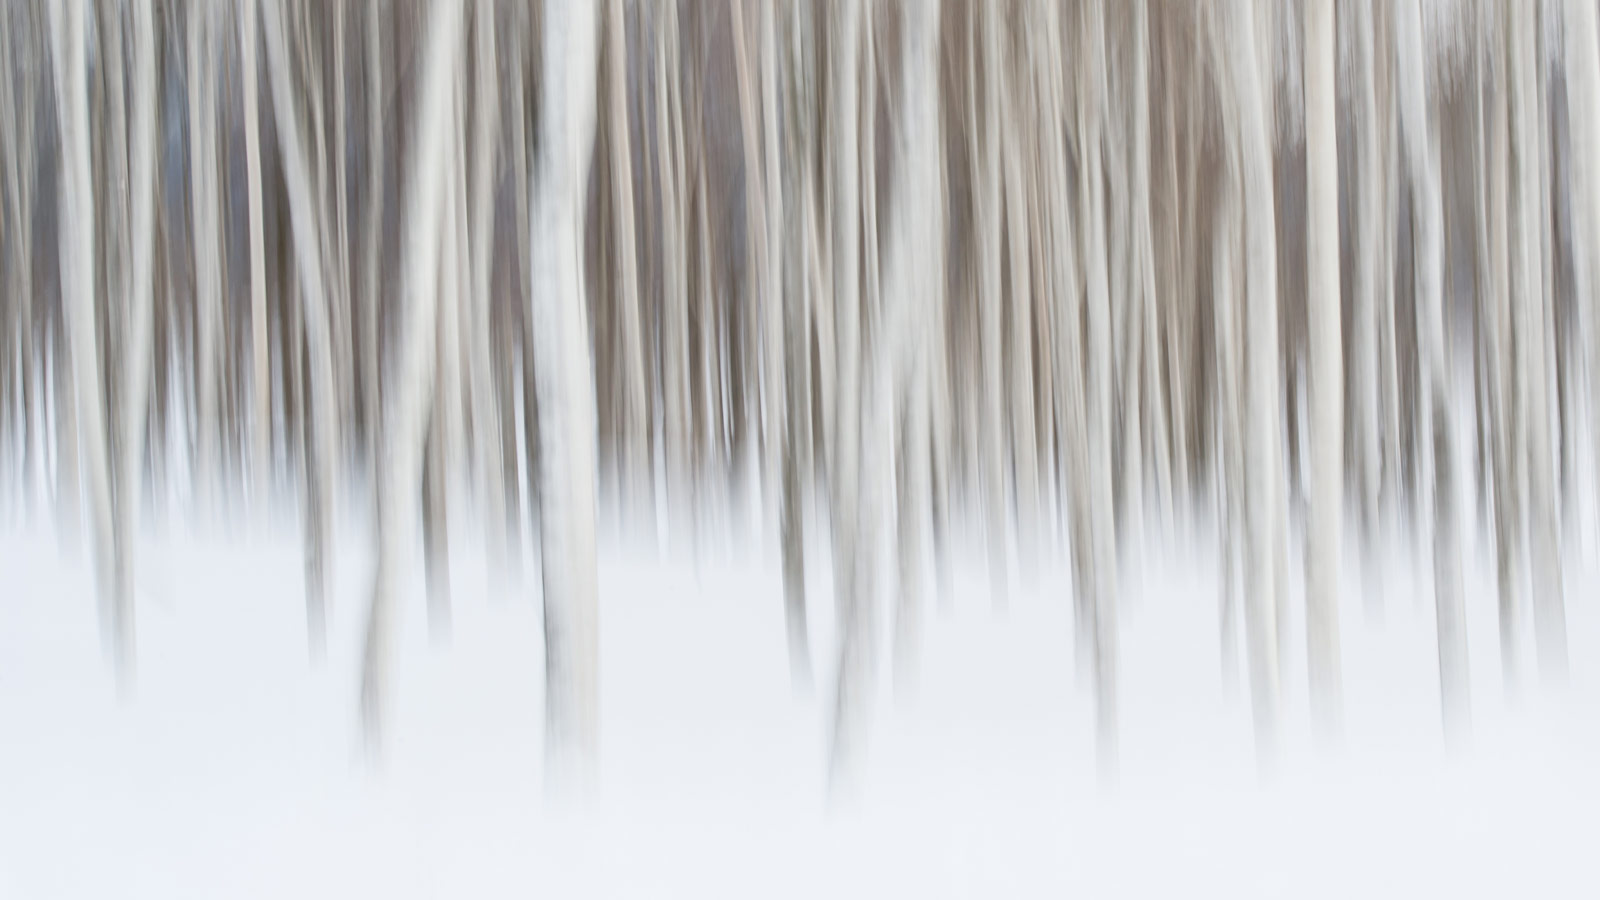 Impressions of a strand of snowbound birches